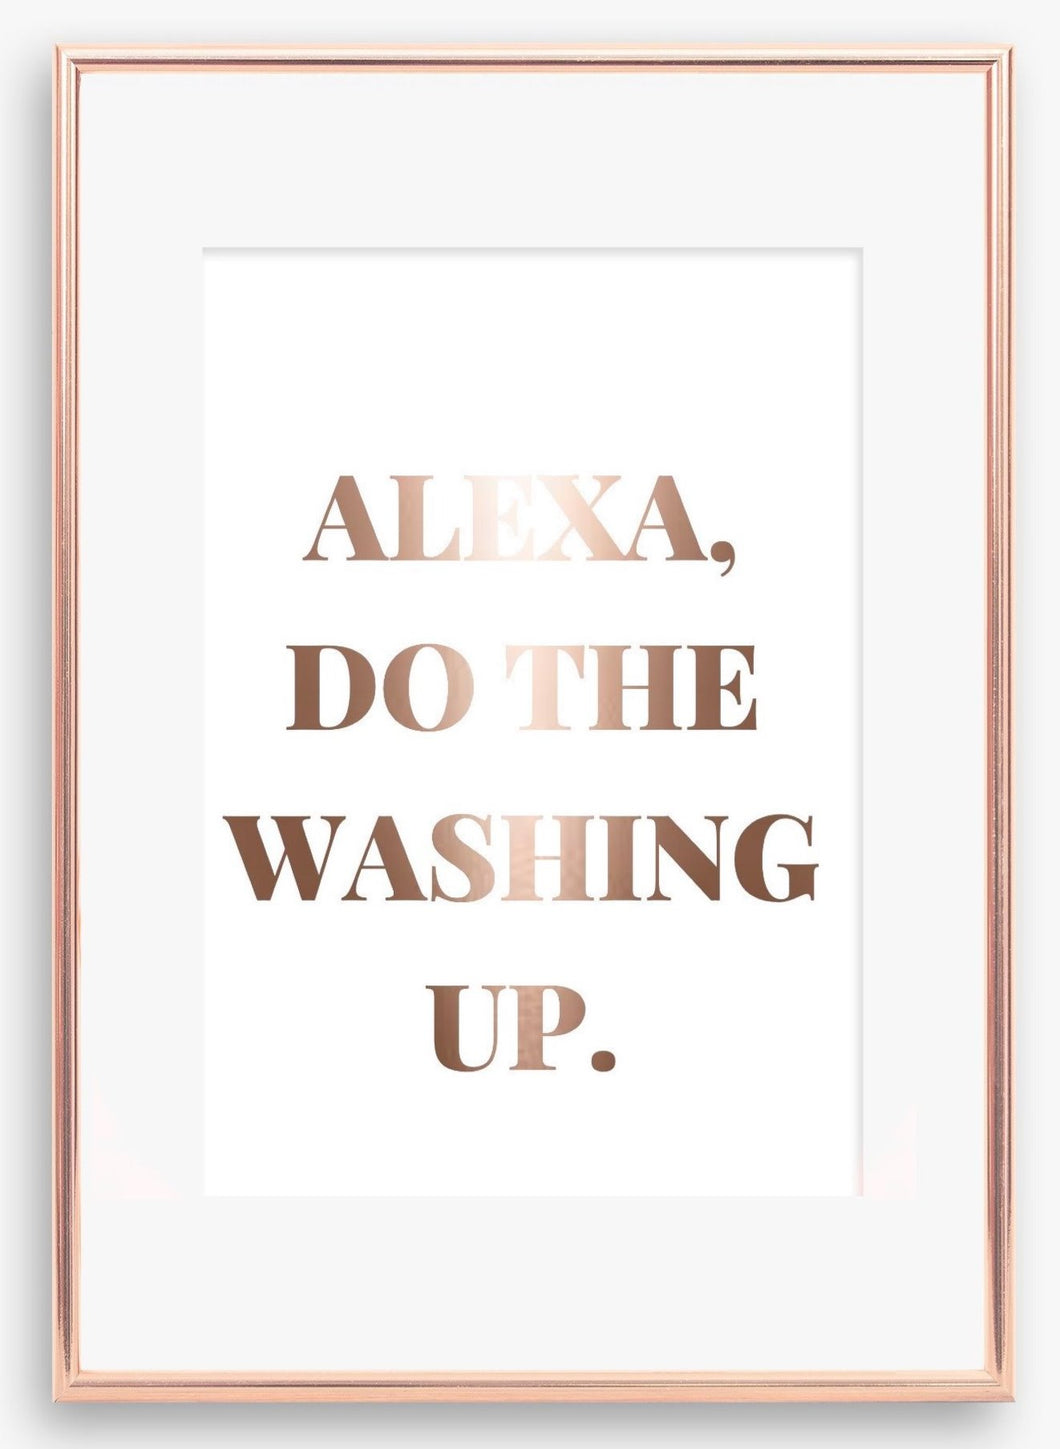 Alexa do the washing up